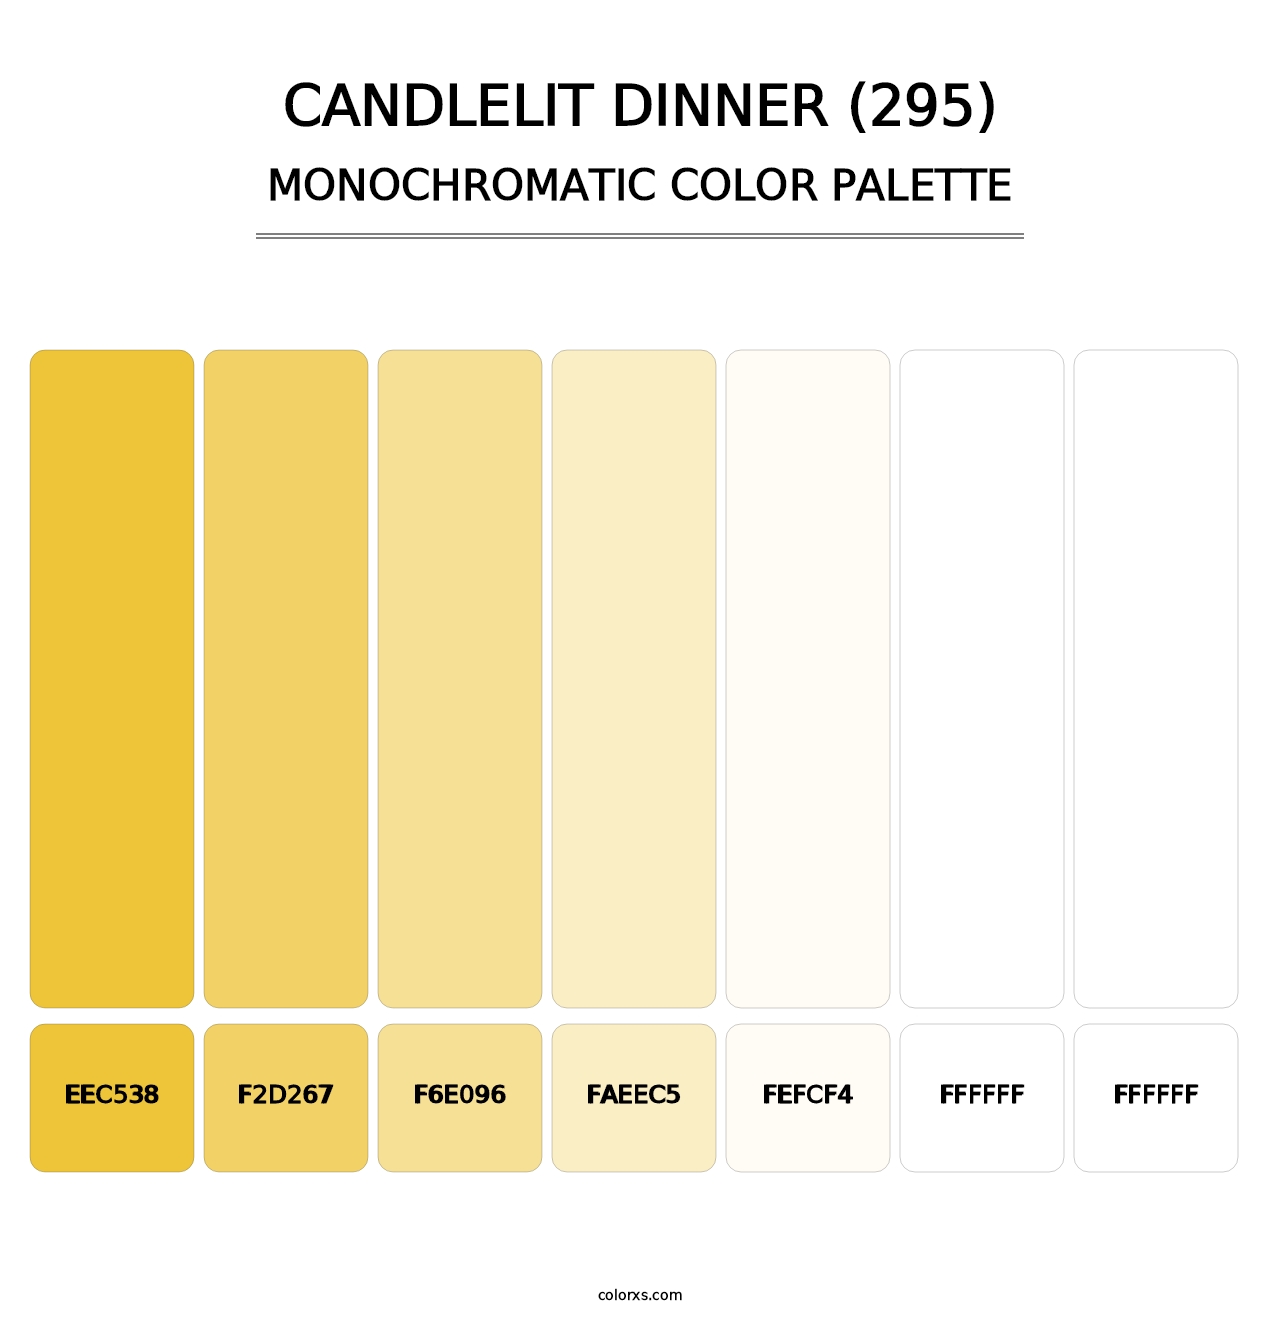 Candlelit Dinner (295) - Monochromatic Color Palette